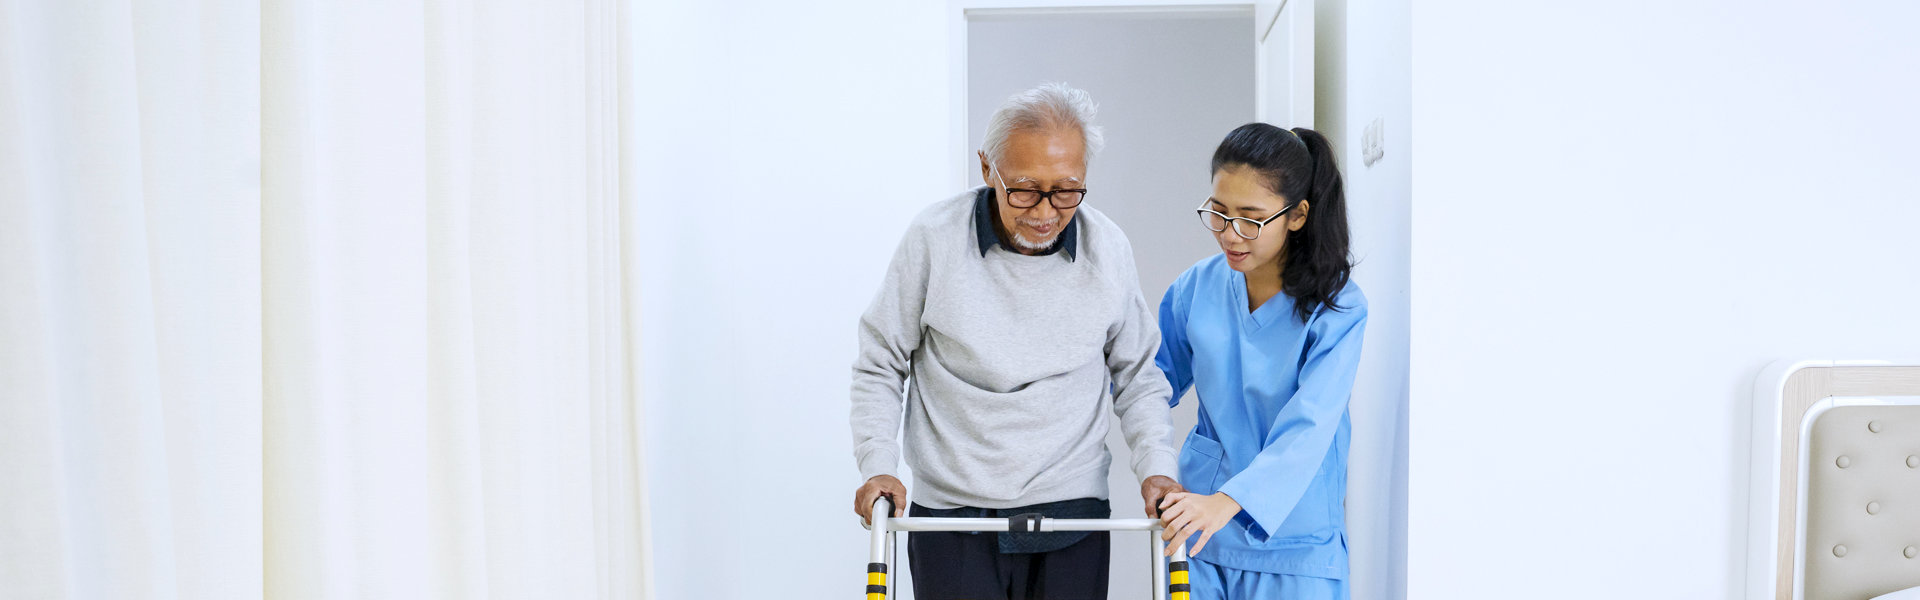 aide assisting an elderly in walking